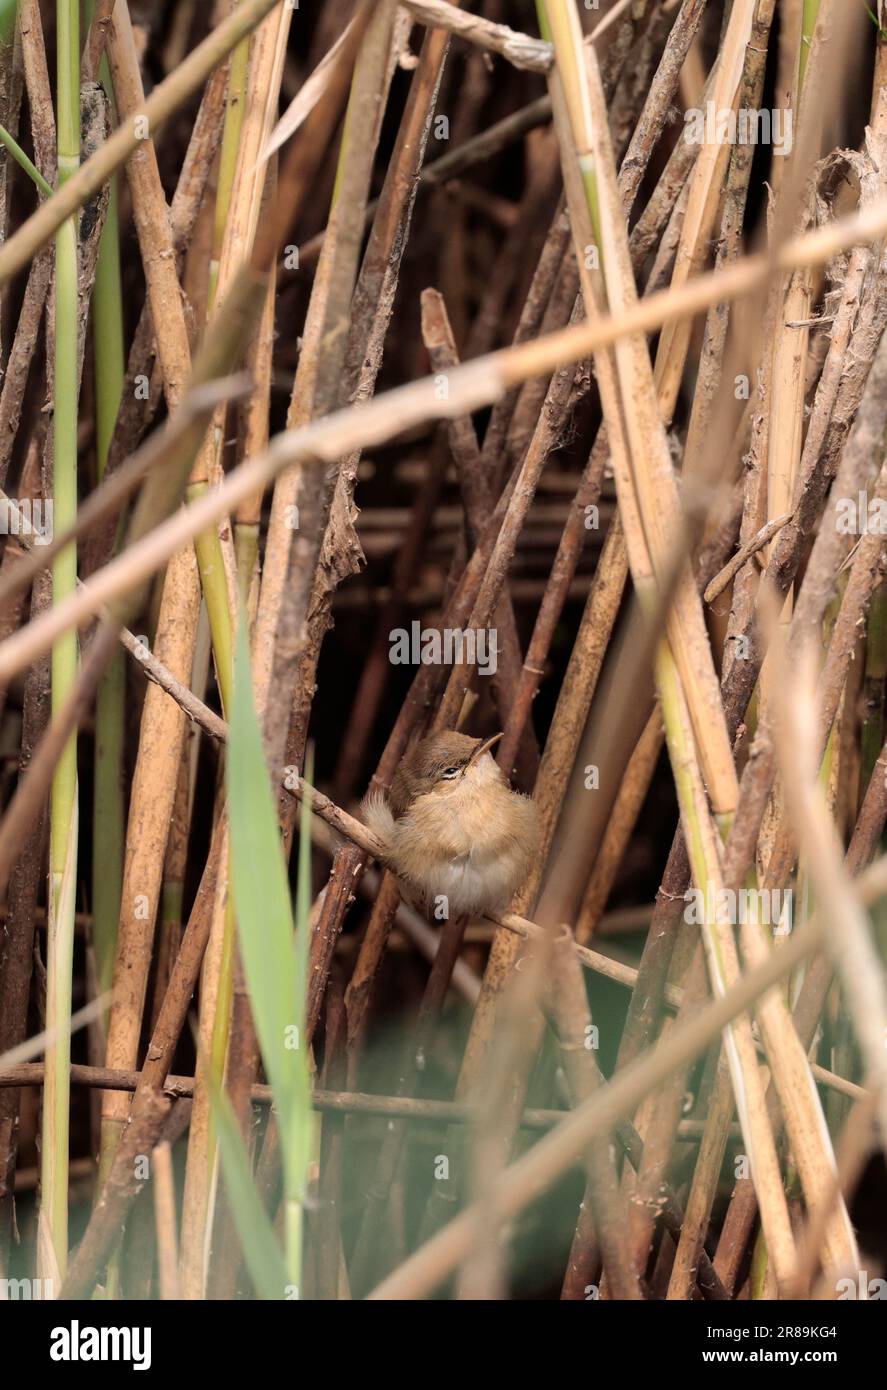 Reed warbler Acrocephalus scirpaceus, sandy brown upperparts paler underparts dark legs brown eyes active perched  in reeds and waterside vegetation Stock Photo